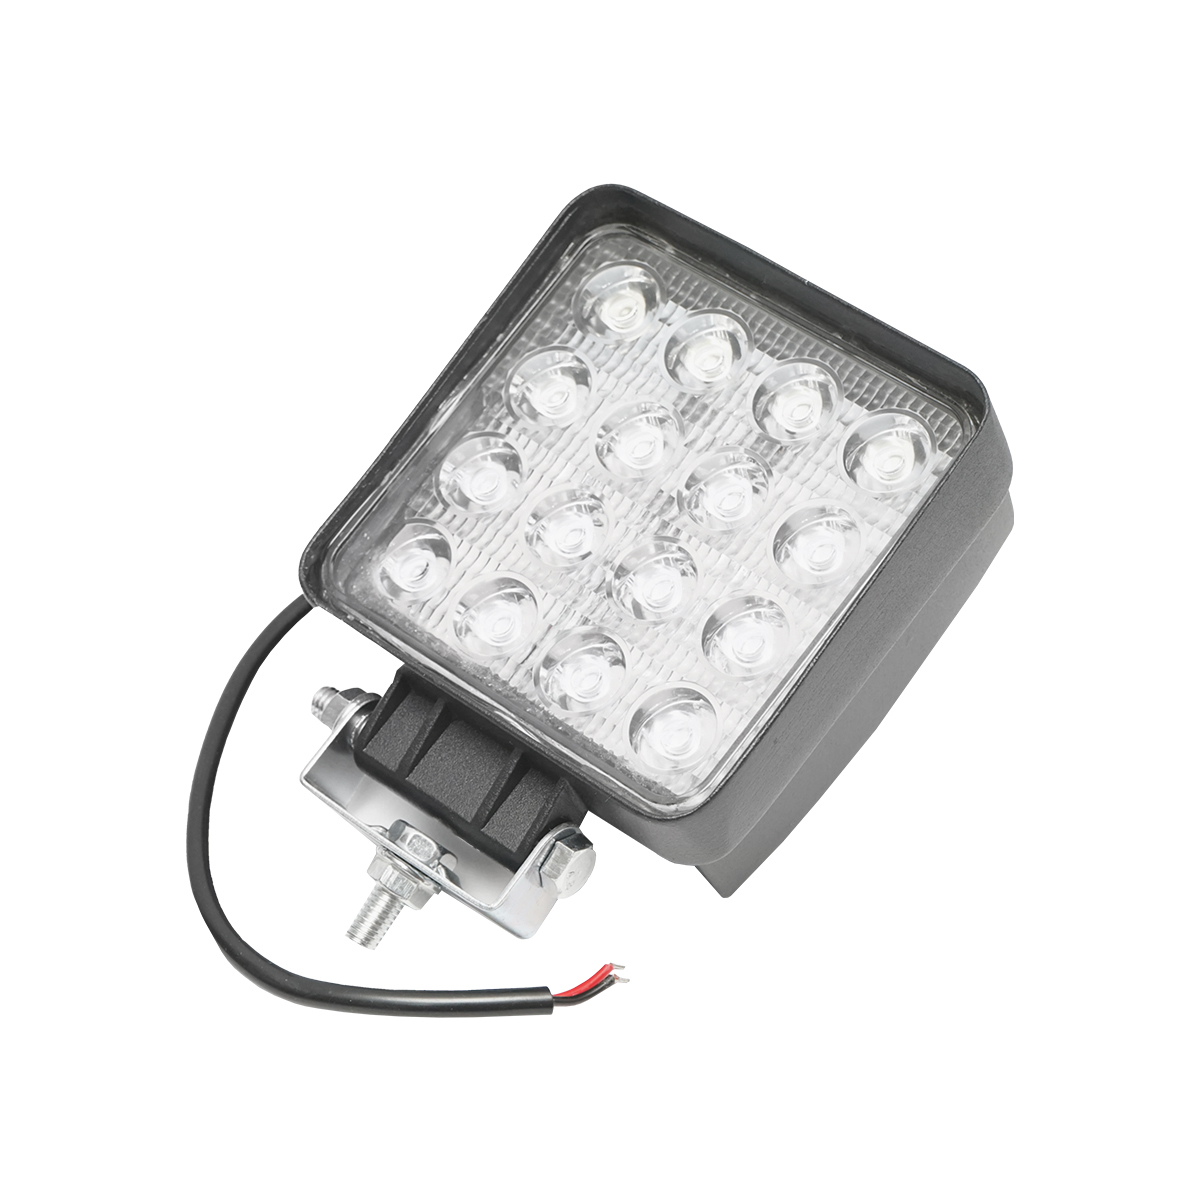 Lampa cu 16 LED-uri 10-30V 48W unghi radiere 60 de grade tip flood 108x108x57mm Breckner Germany